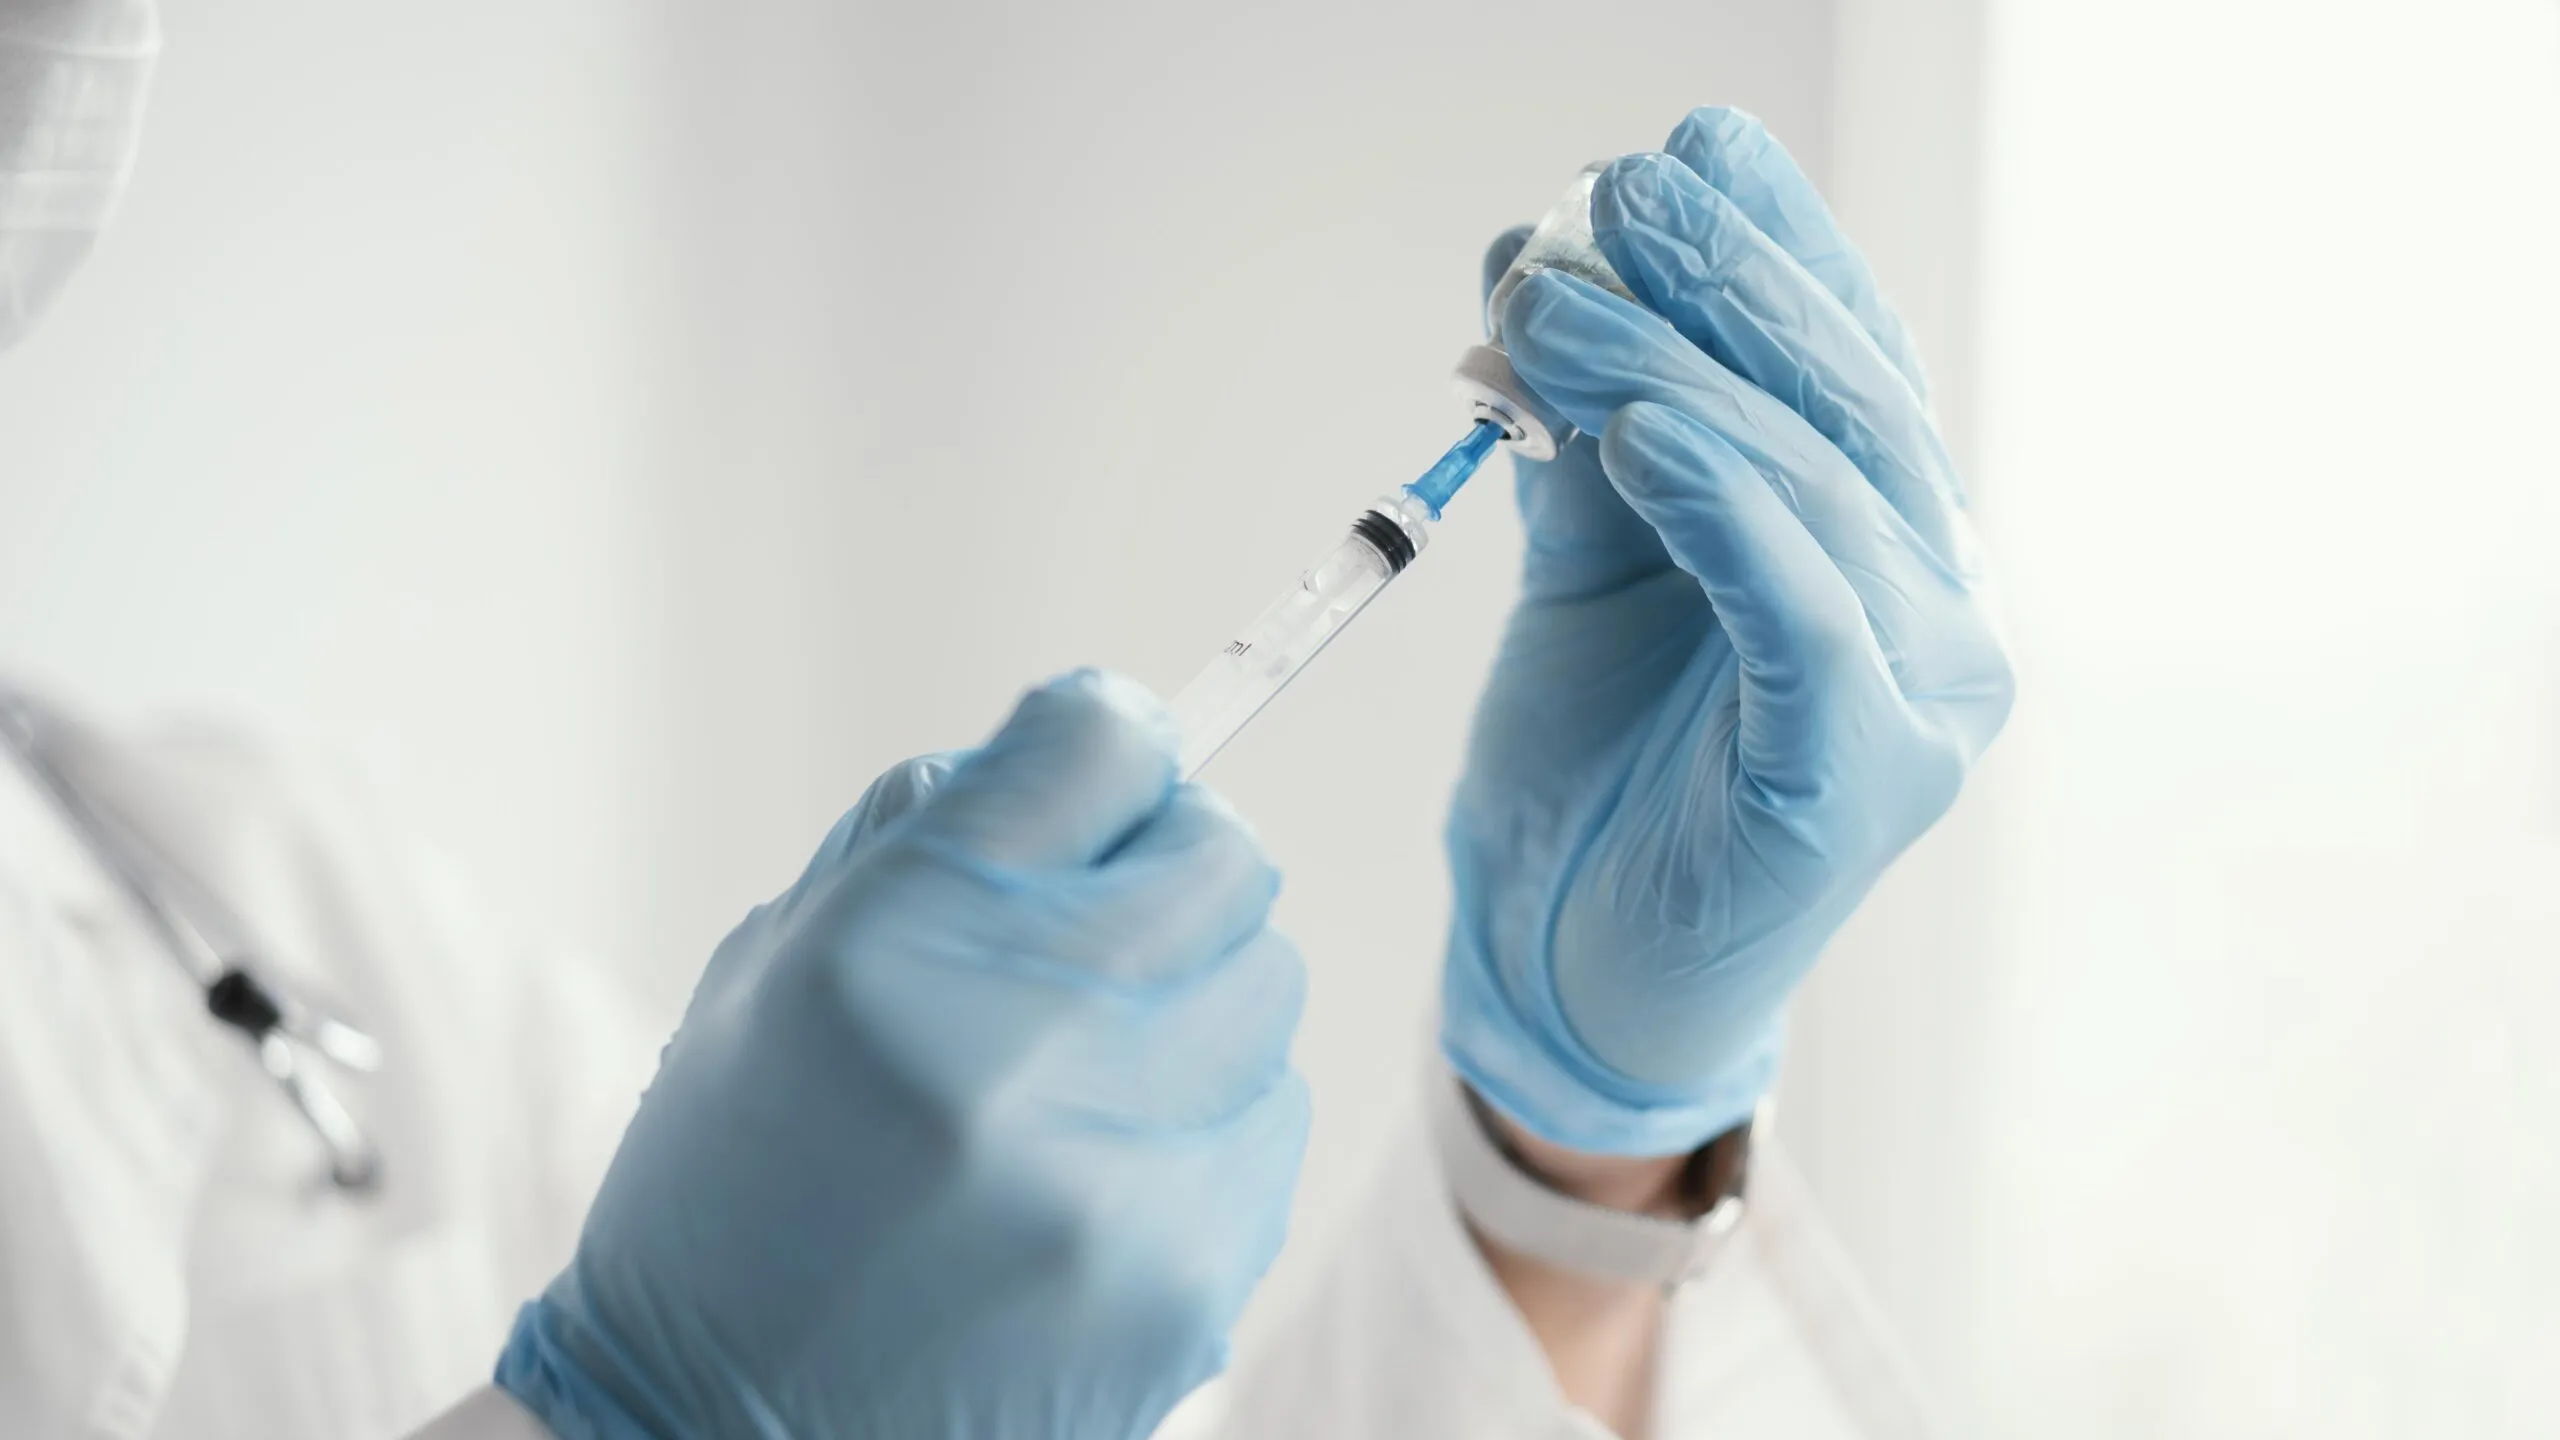 HPV vaccine against cervical cancer